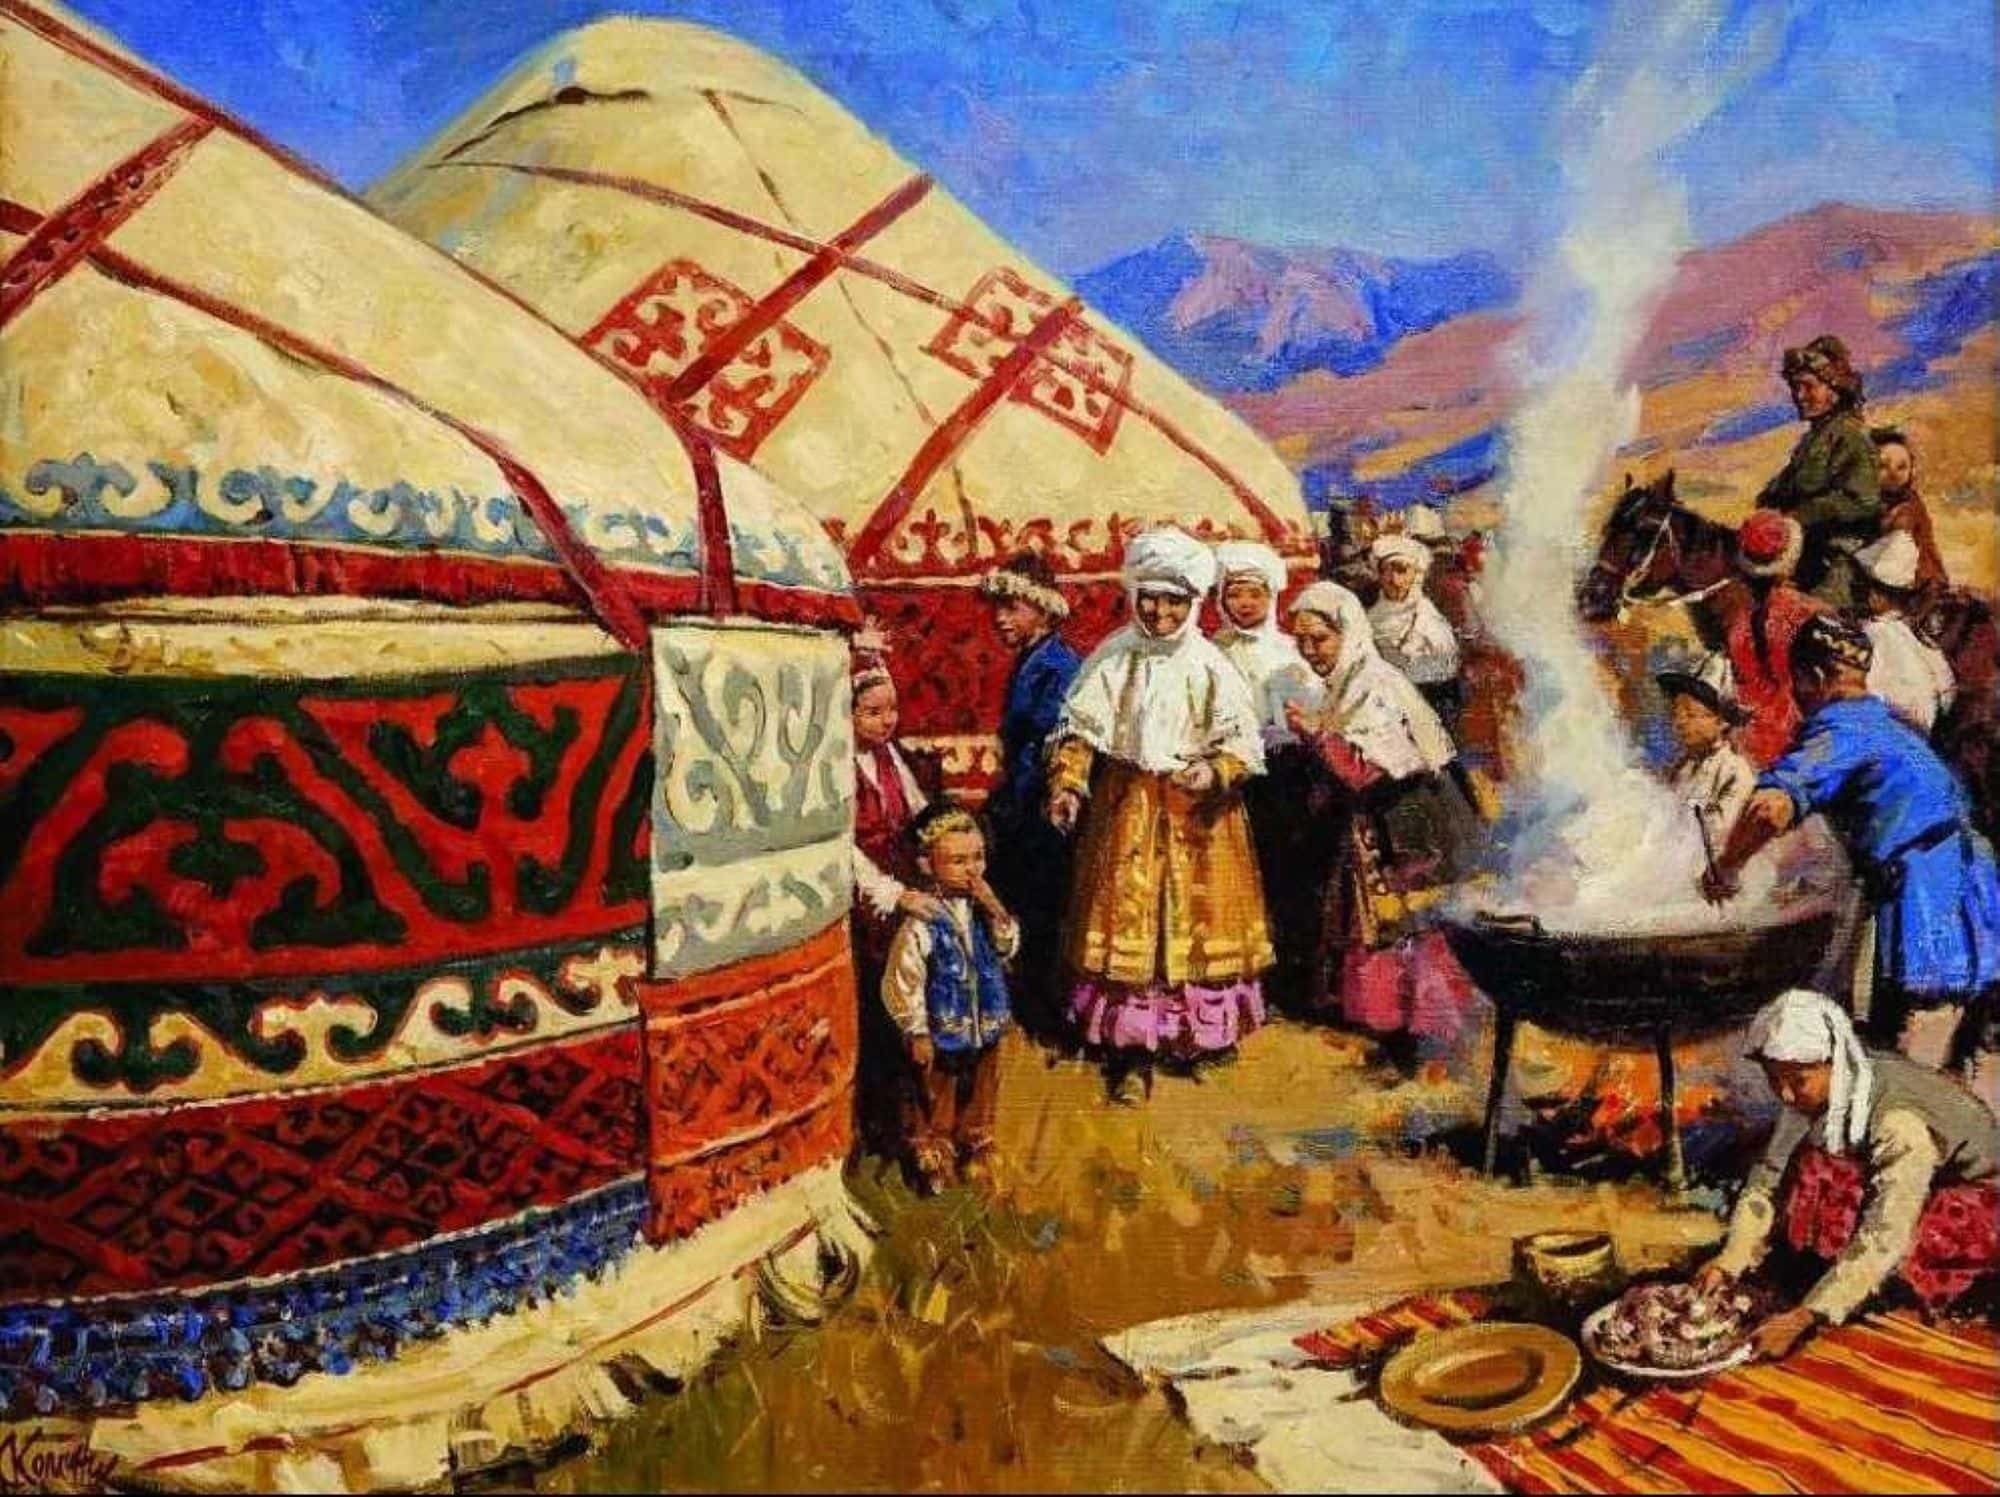 Kazakh traditions